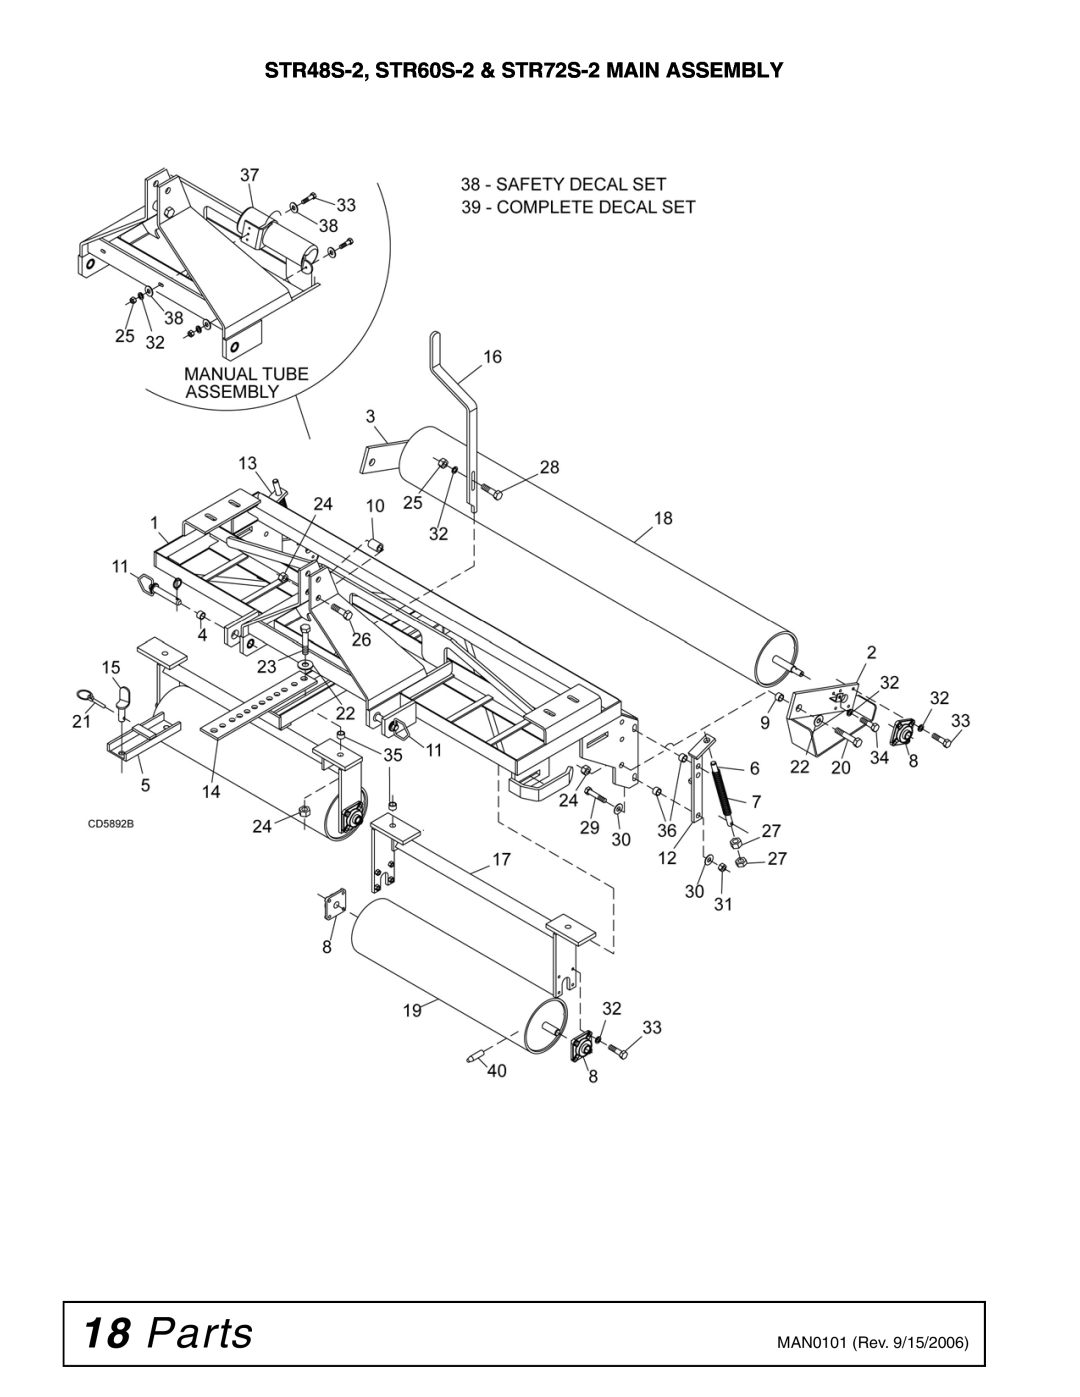 Woods Equipment manual Parts, STR48S-2, STR60S-2 & STR72S-2 MAIN ASSEMBLY 